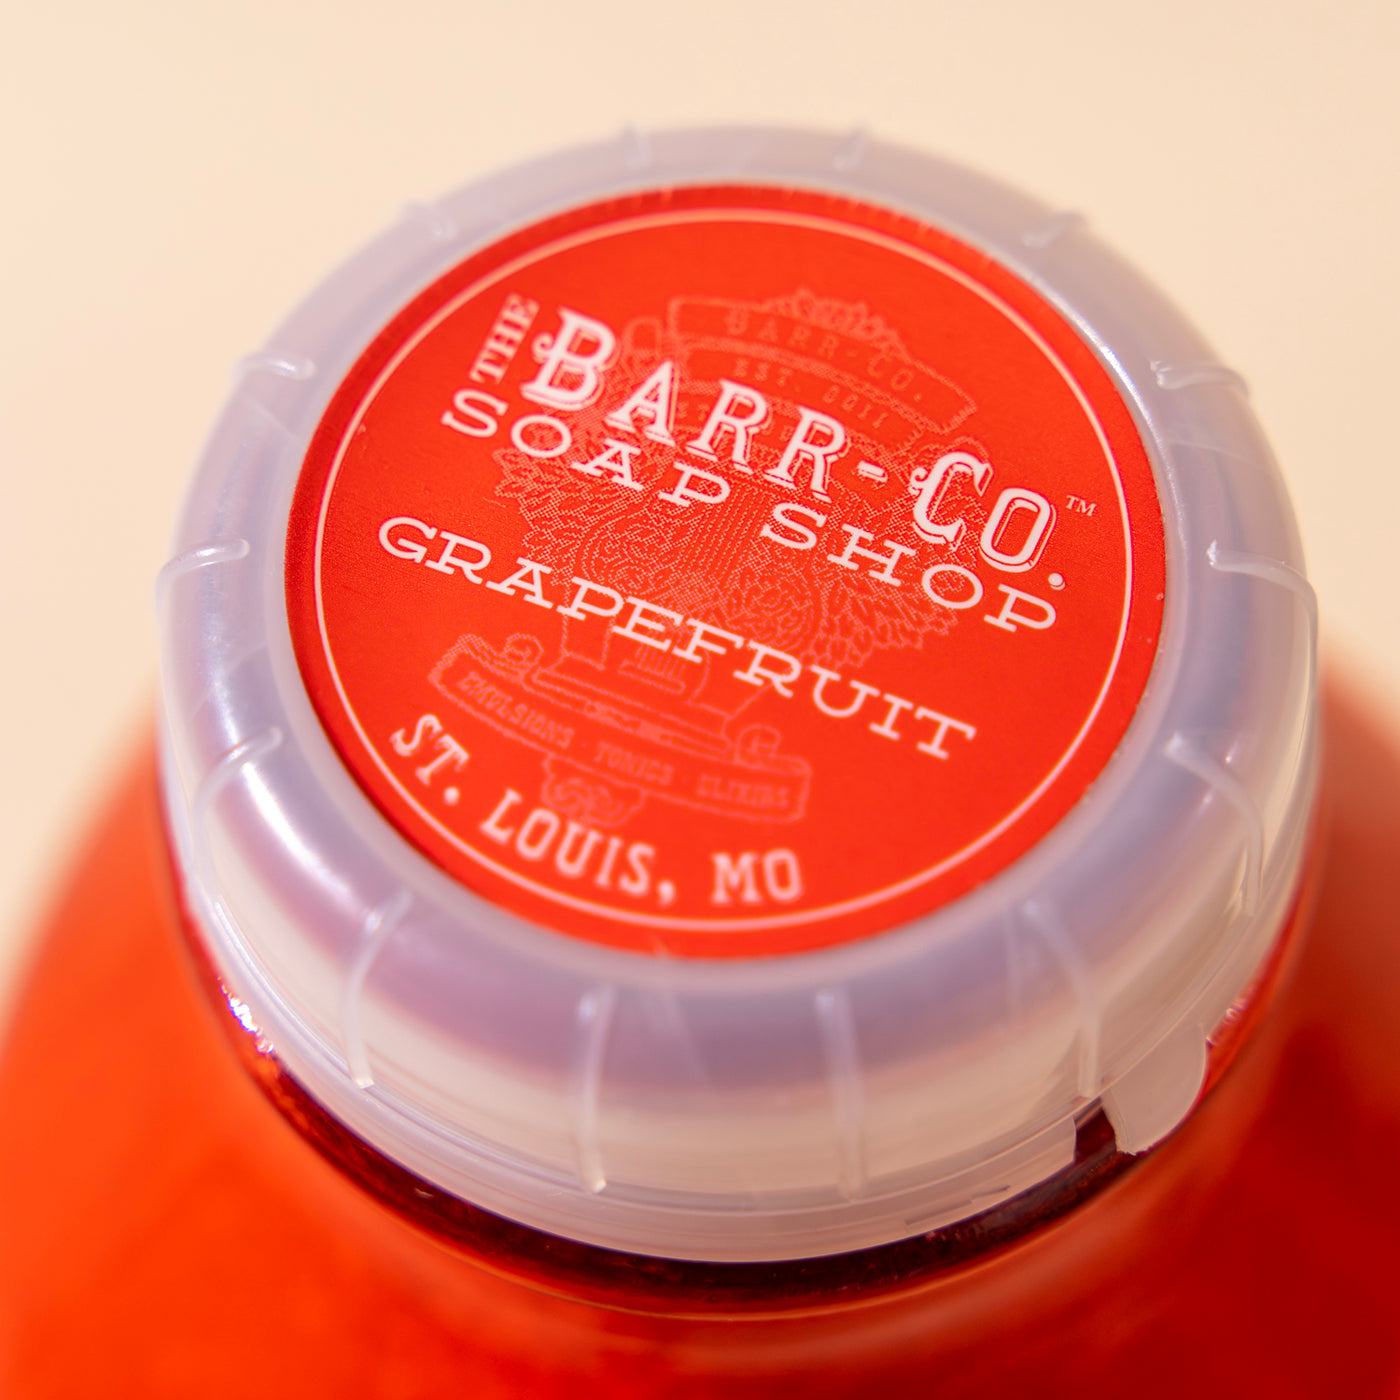 Barr-Co. Grapefruit Bath Soak